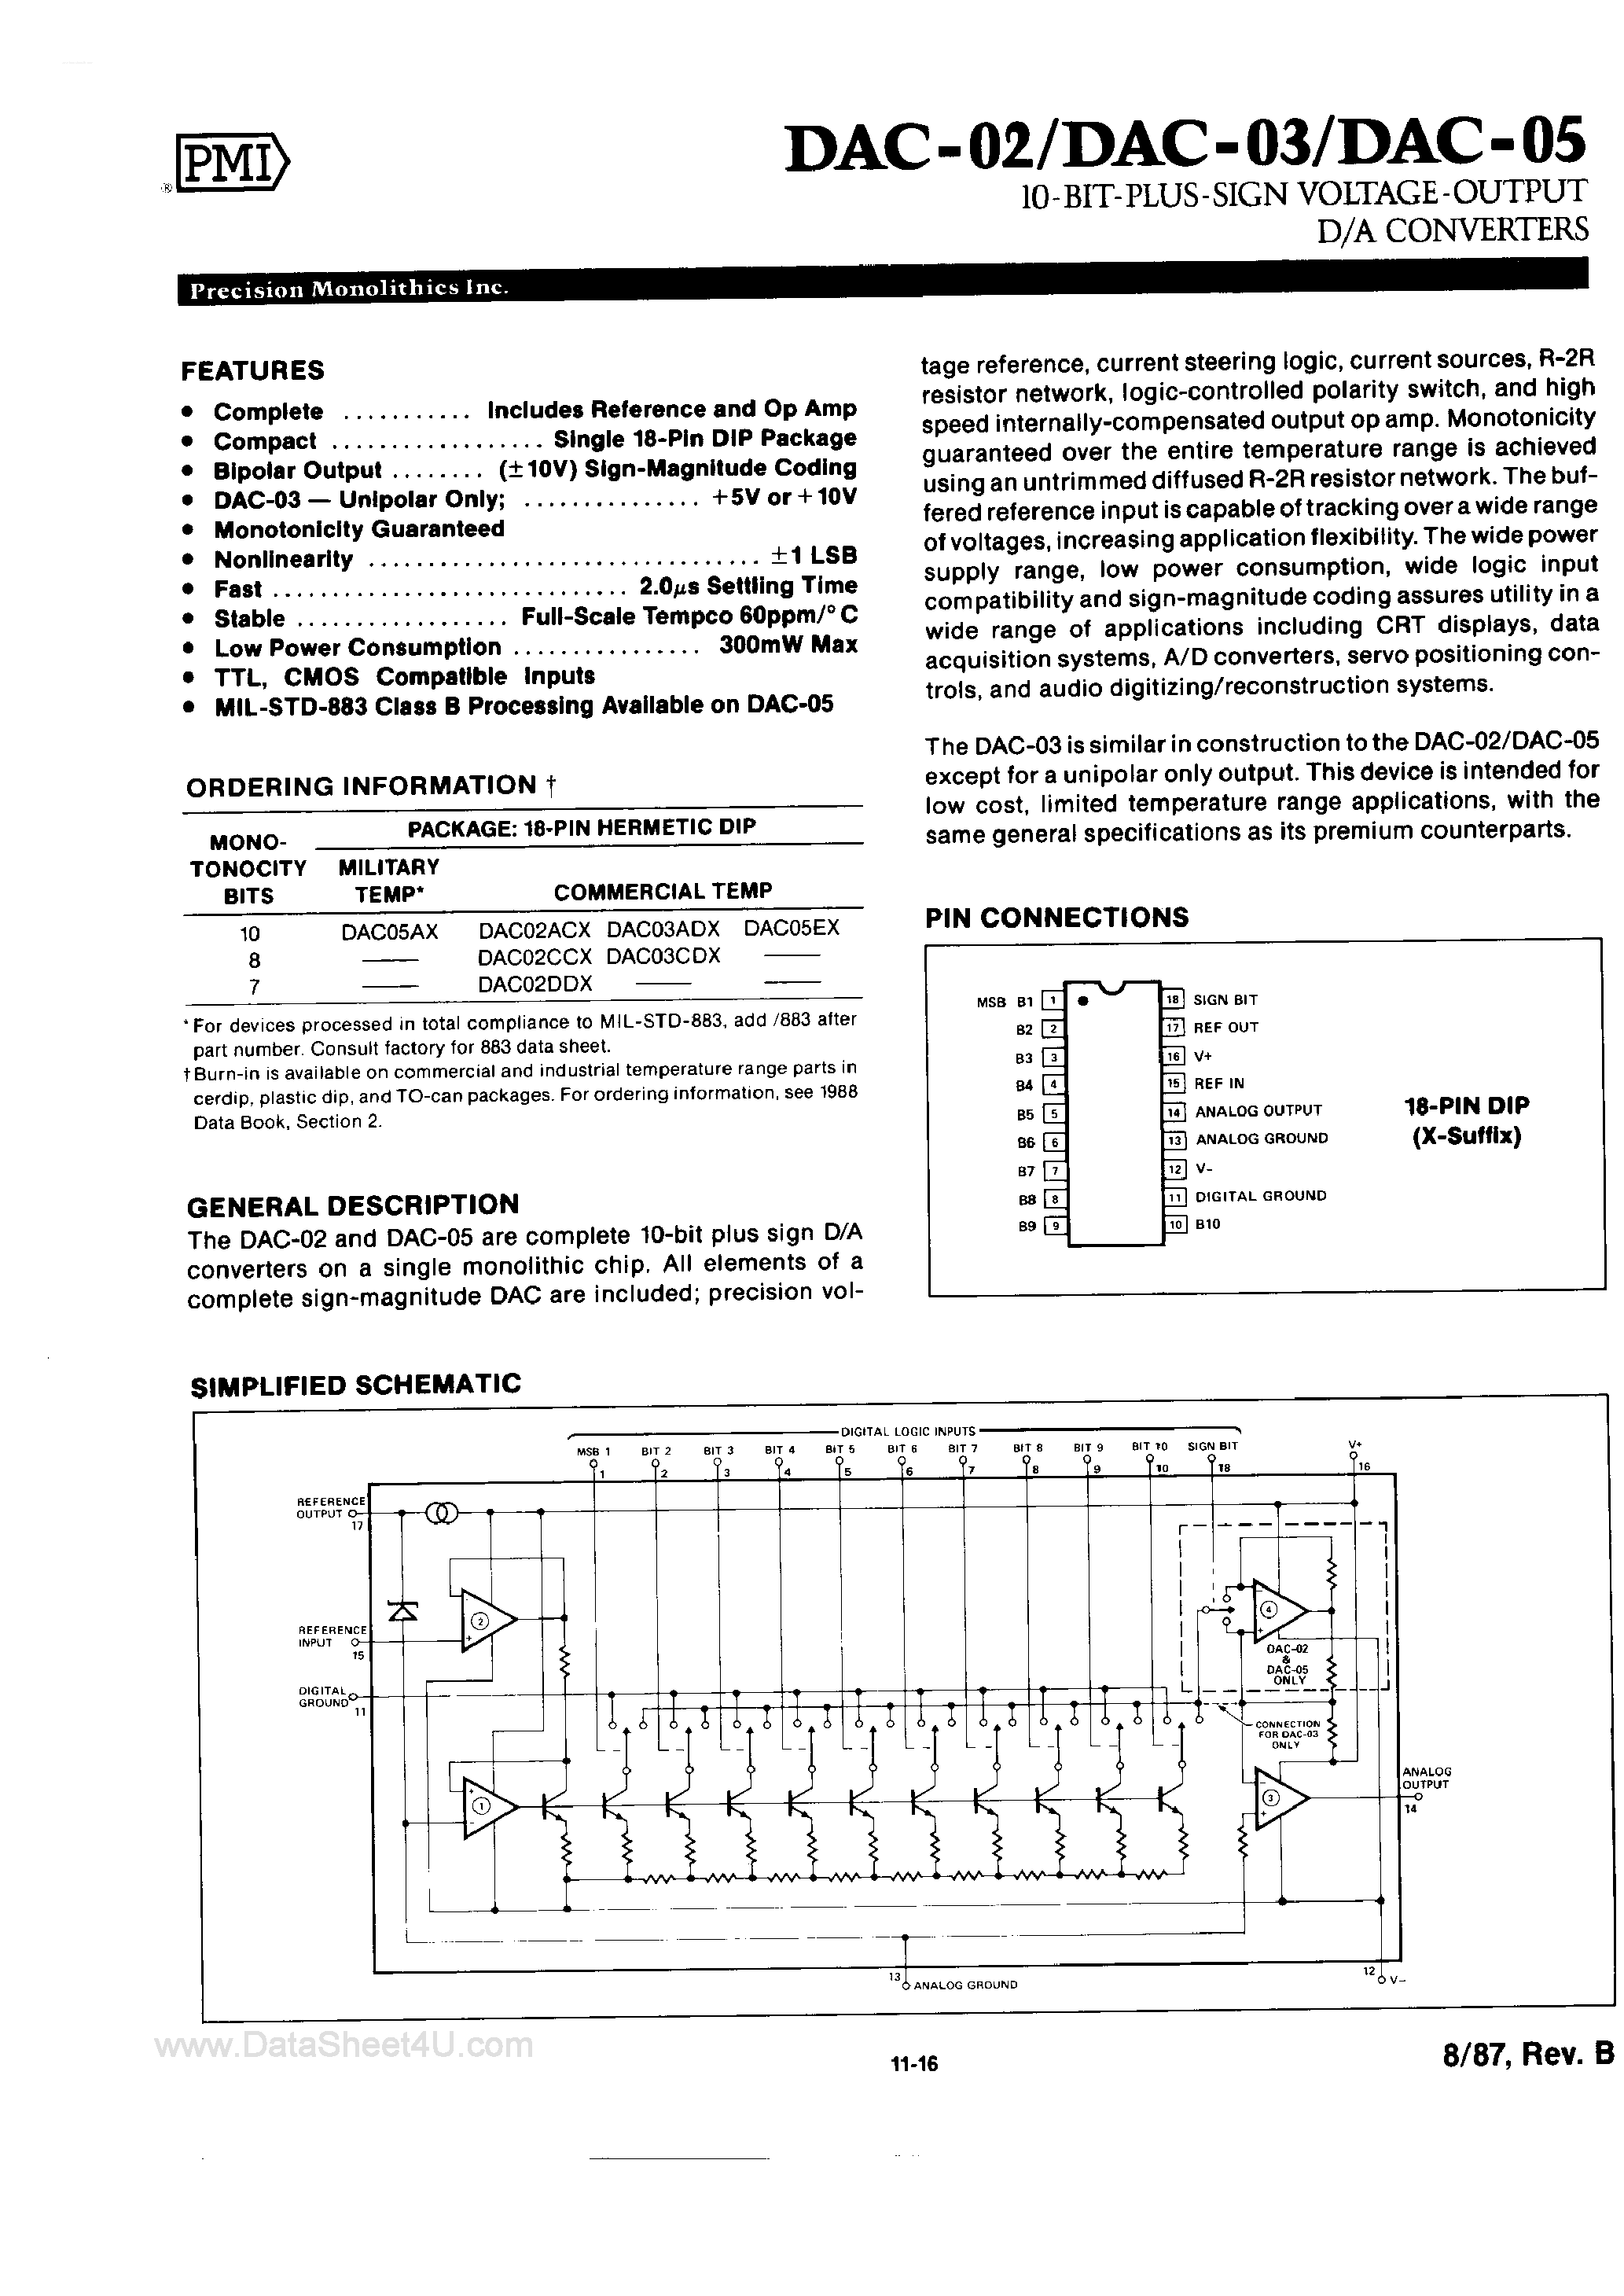 Datasheet DAC-02 - (DAC-0x) 10-Bit Plus Sign Voltage Output D/A Converters page 1